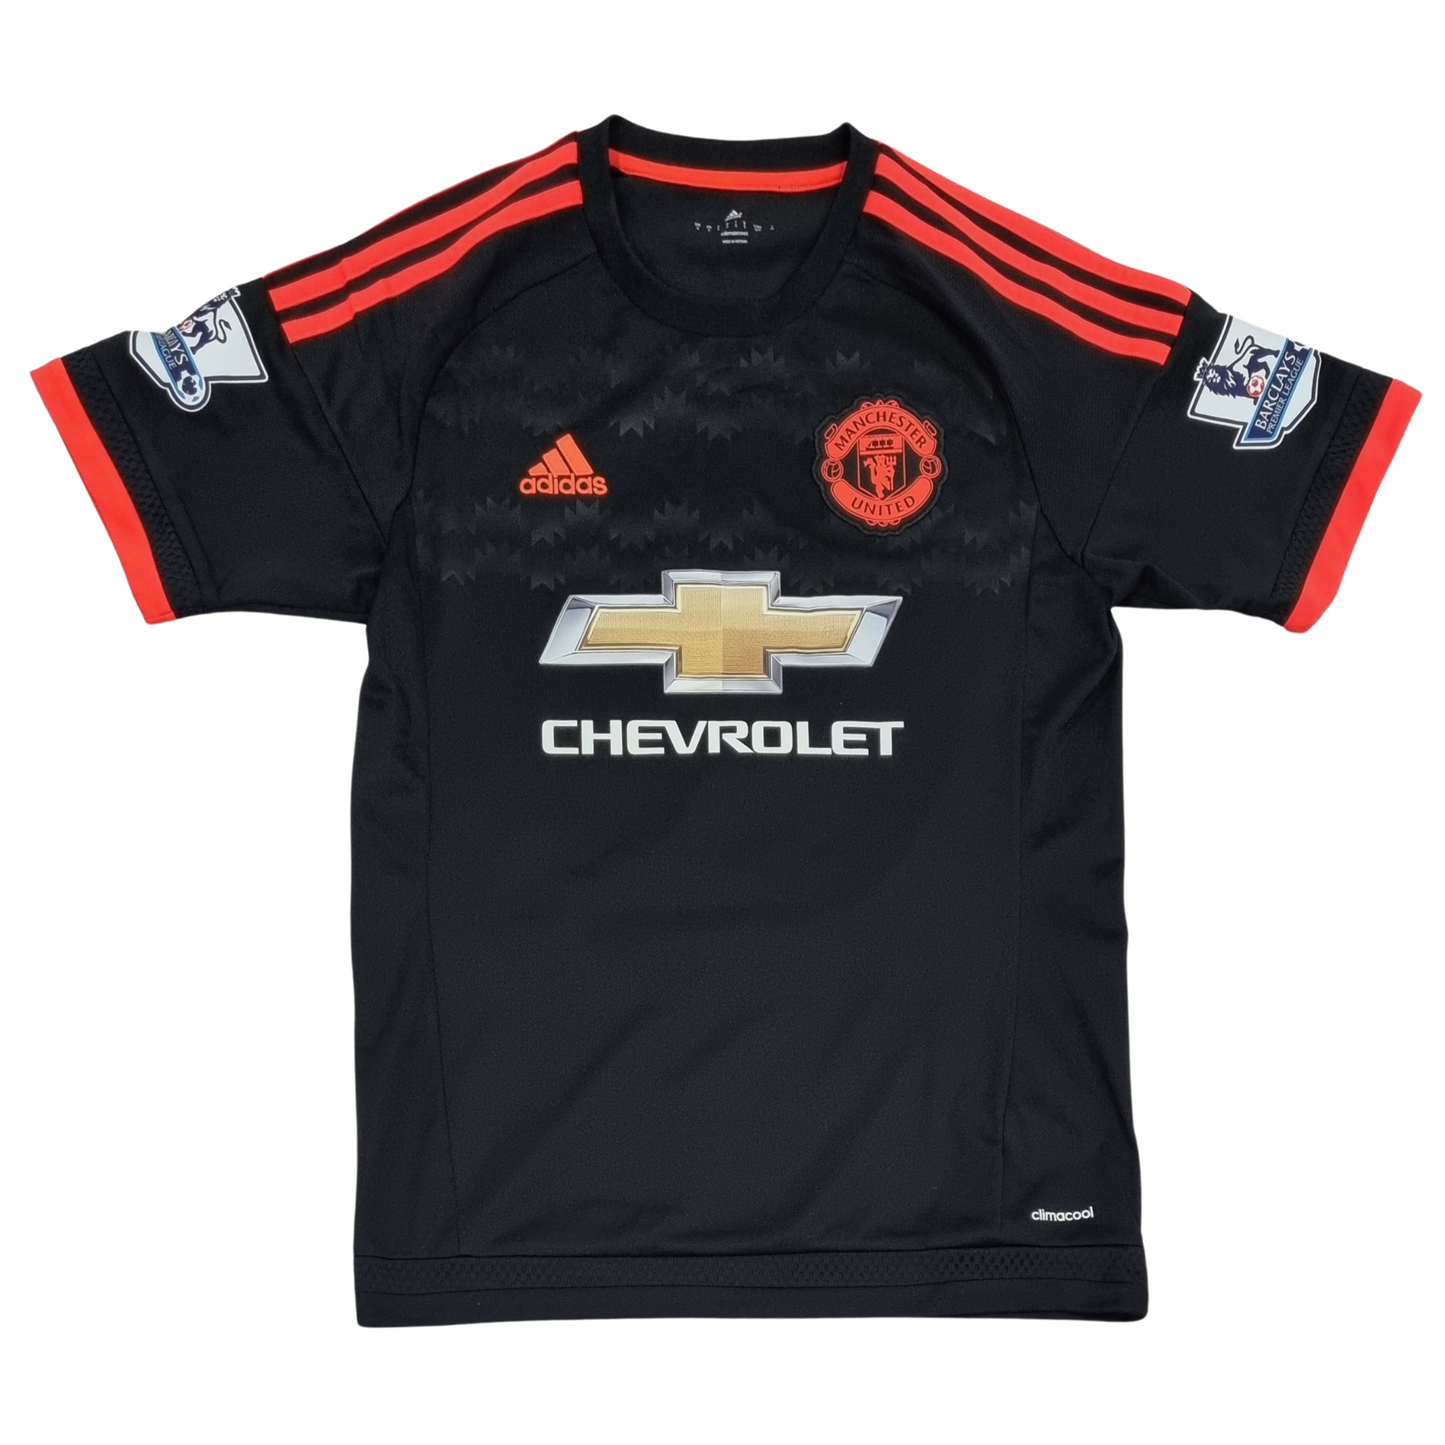 Manchester United 2015/16 Third Jersey Front - Ander Herrera